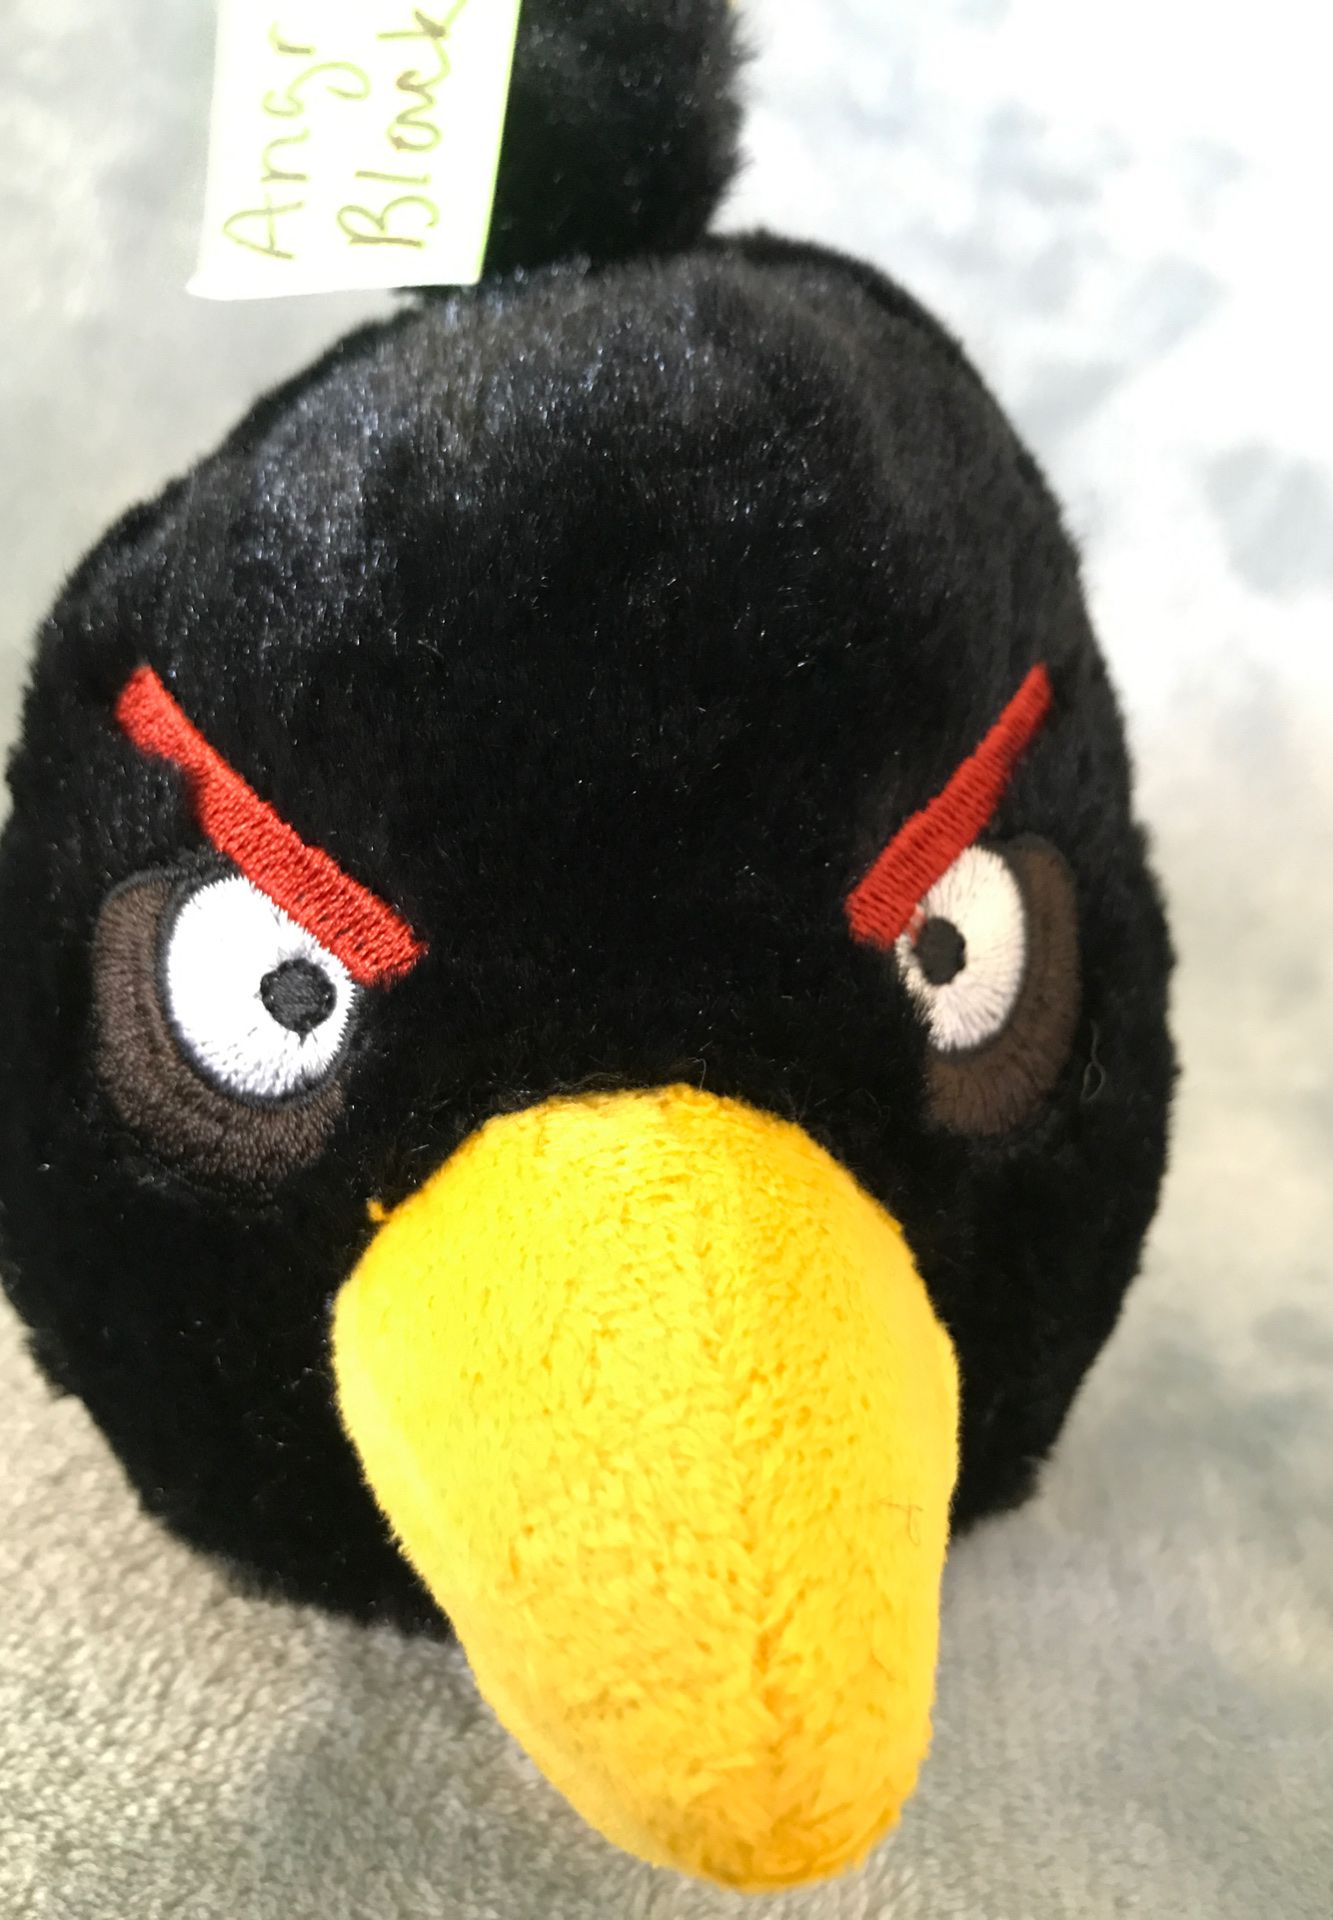 4” angry Birds stuffed animal